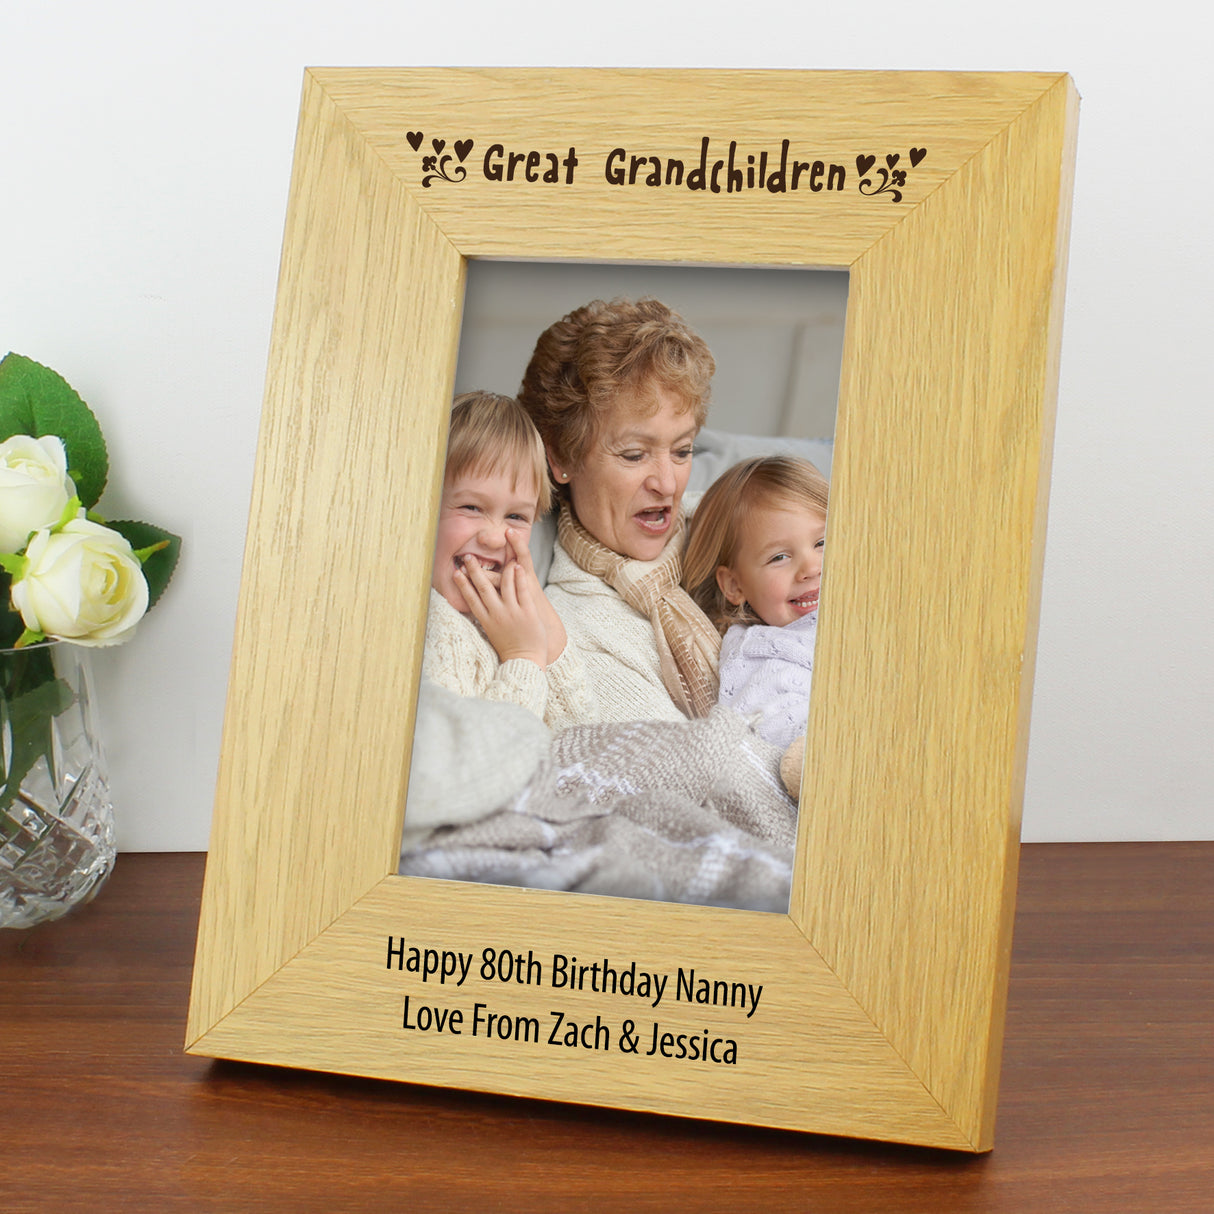 Personalised Great Grandchildren 6x4 Oak Finish Photo Frame